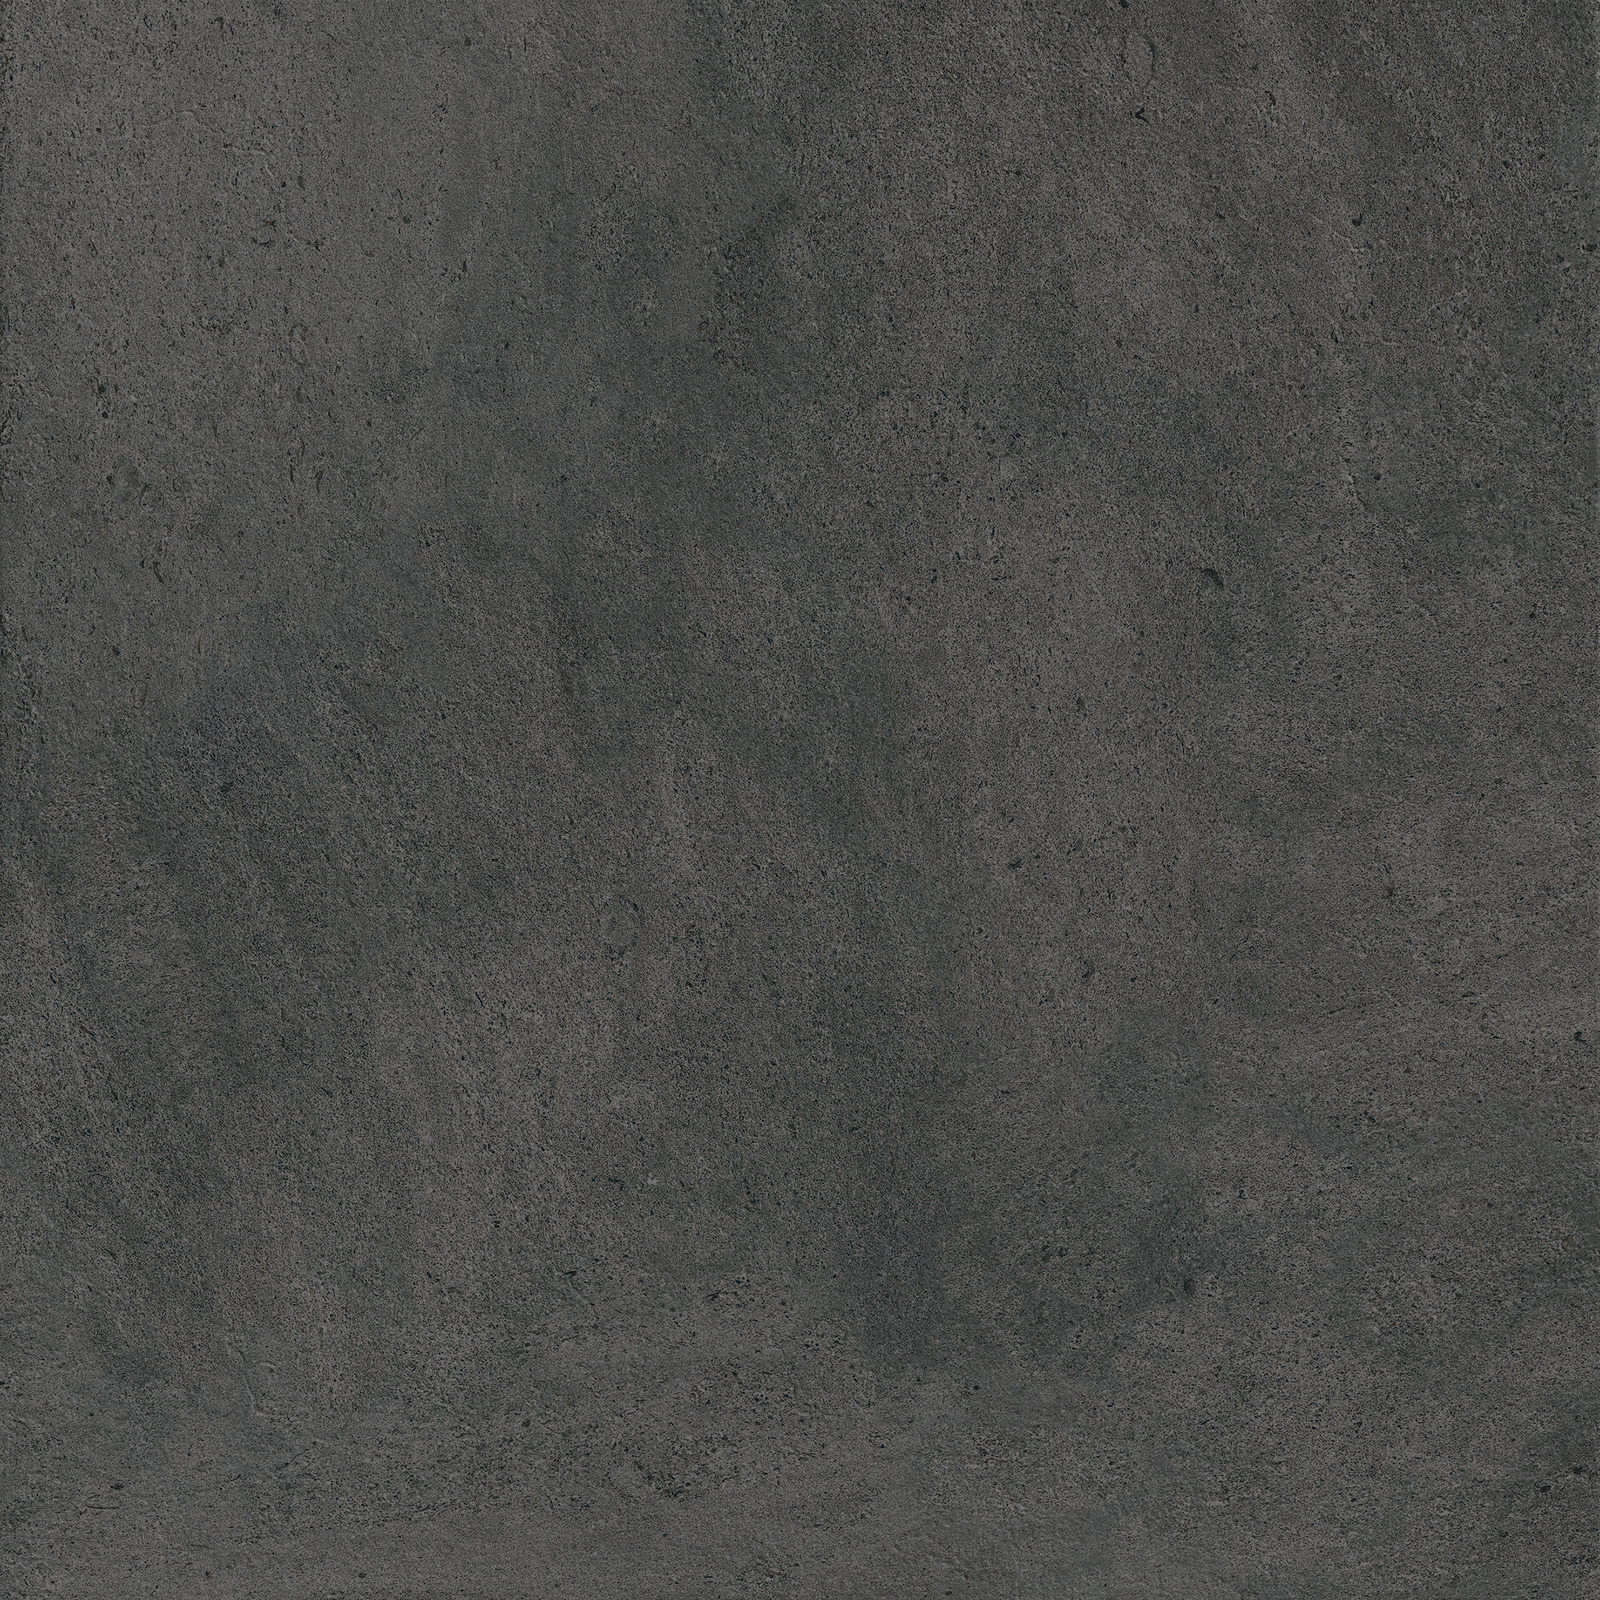 Gresie rectificata Stonework Anthracite 60×60 cm MLHC Marazzi